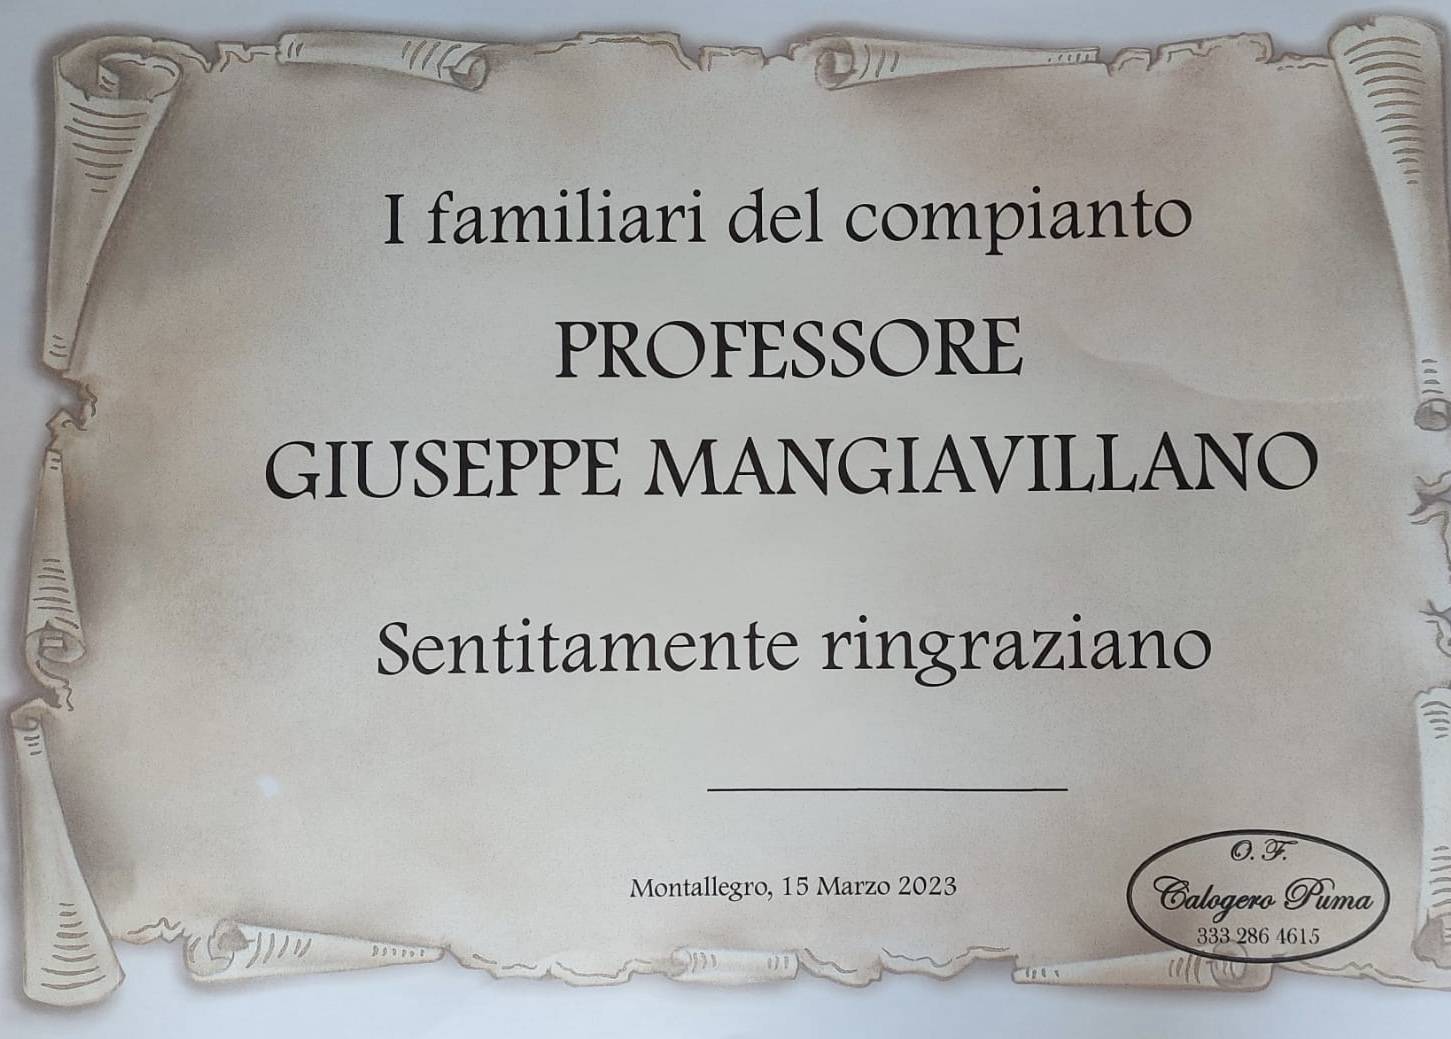 Giuseppe Mangiavillano